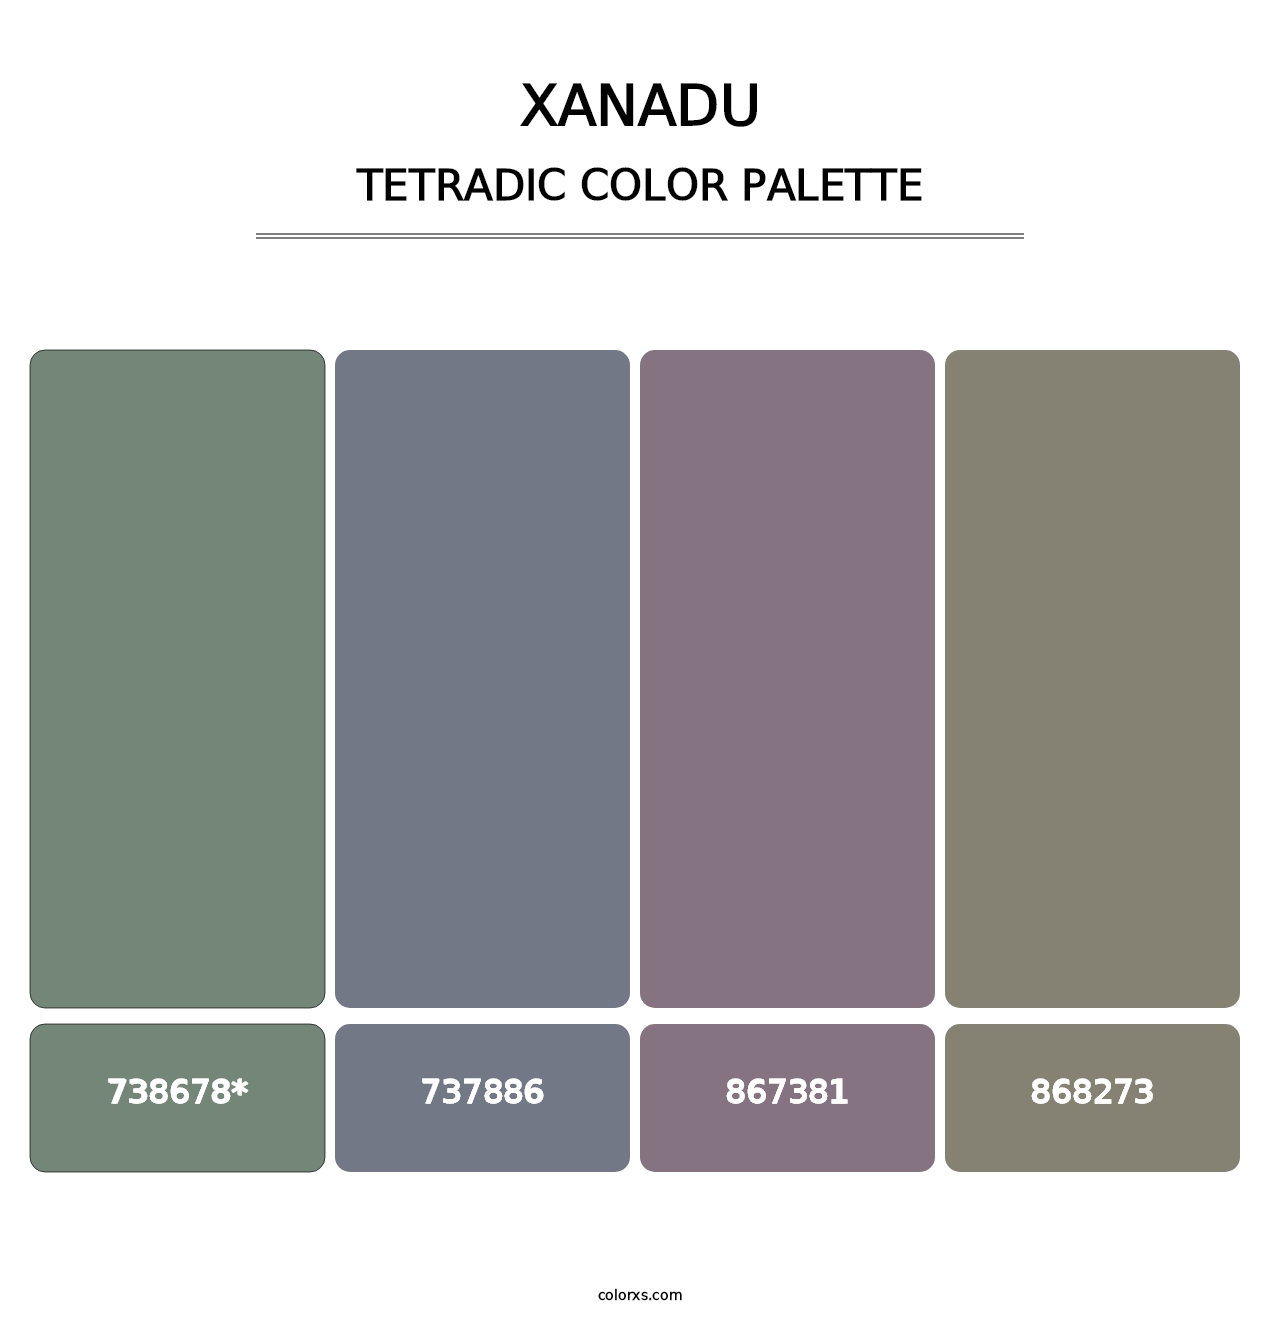 Xanadu - Tetradic Color Palette